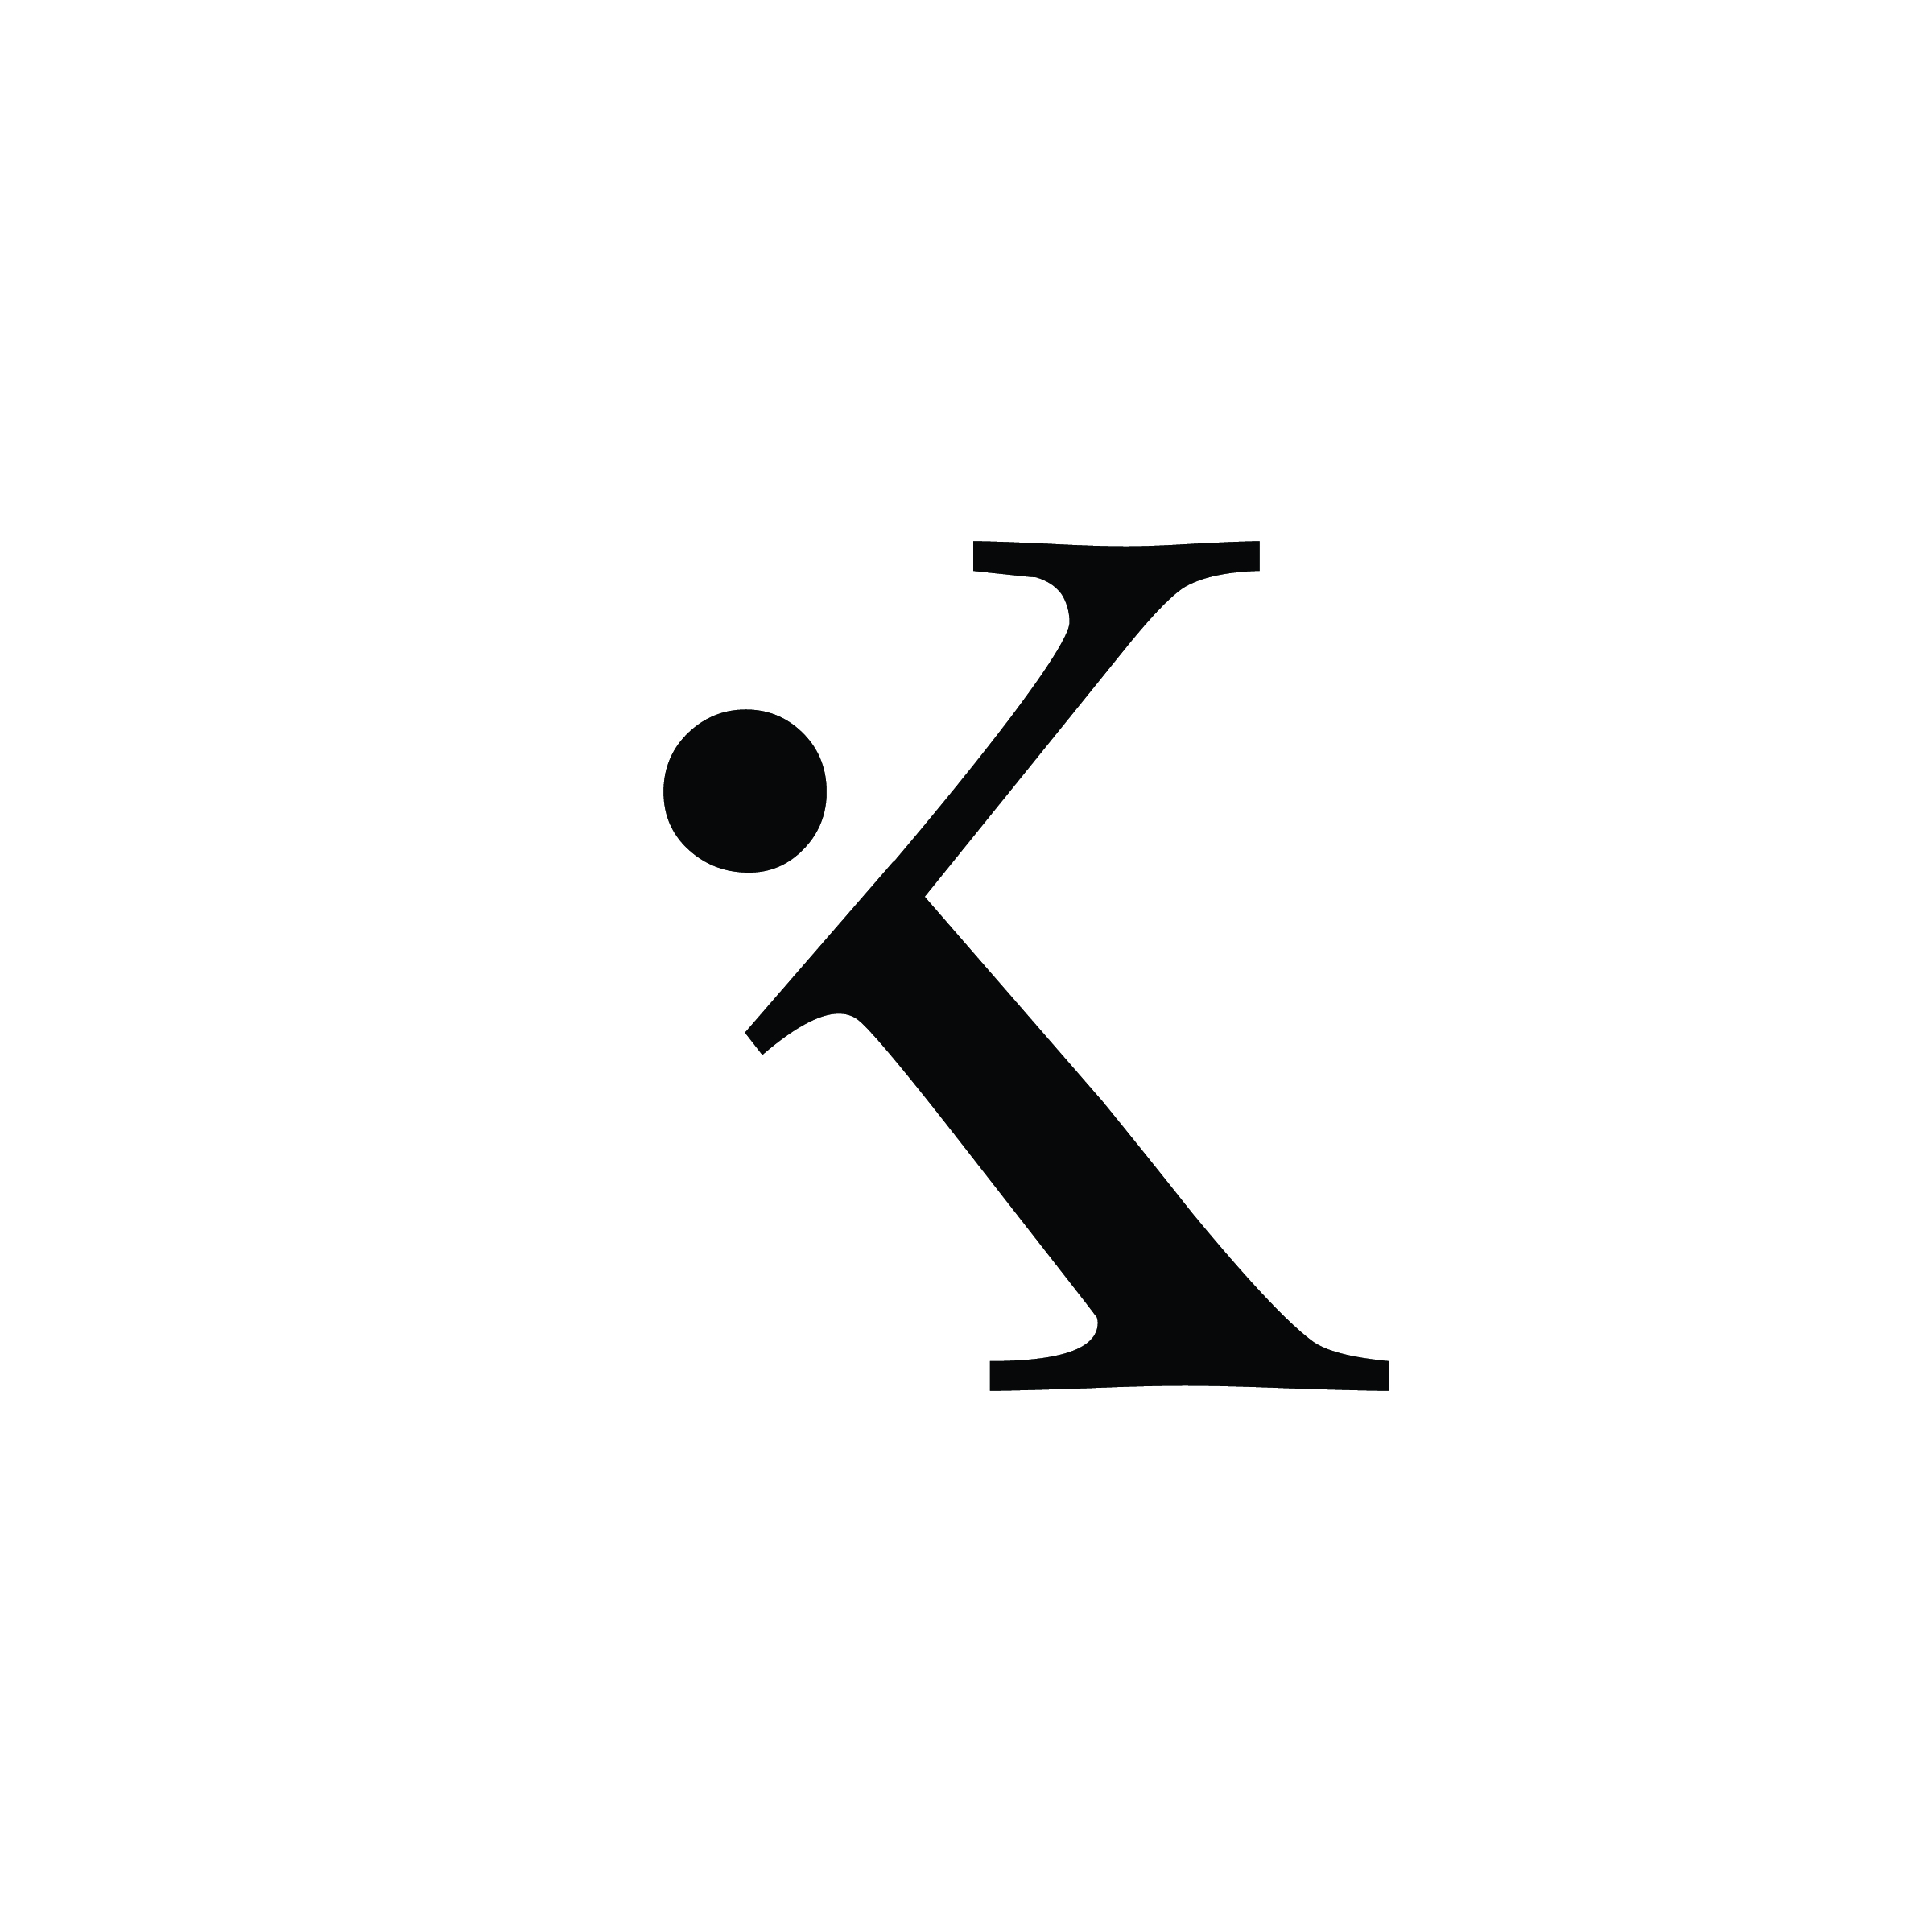 A "K" monogram.